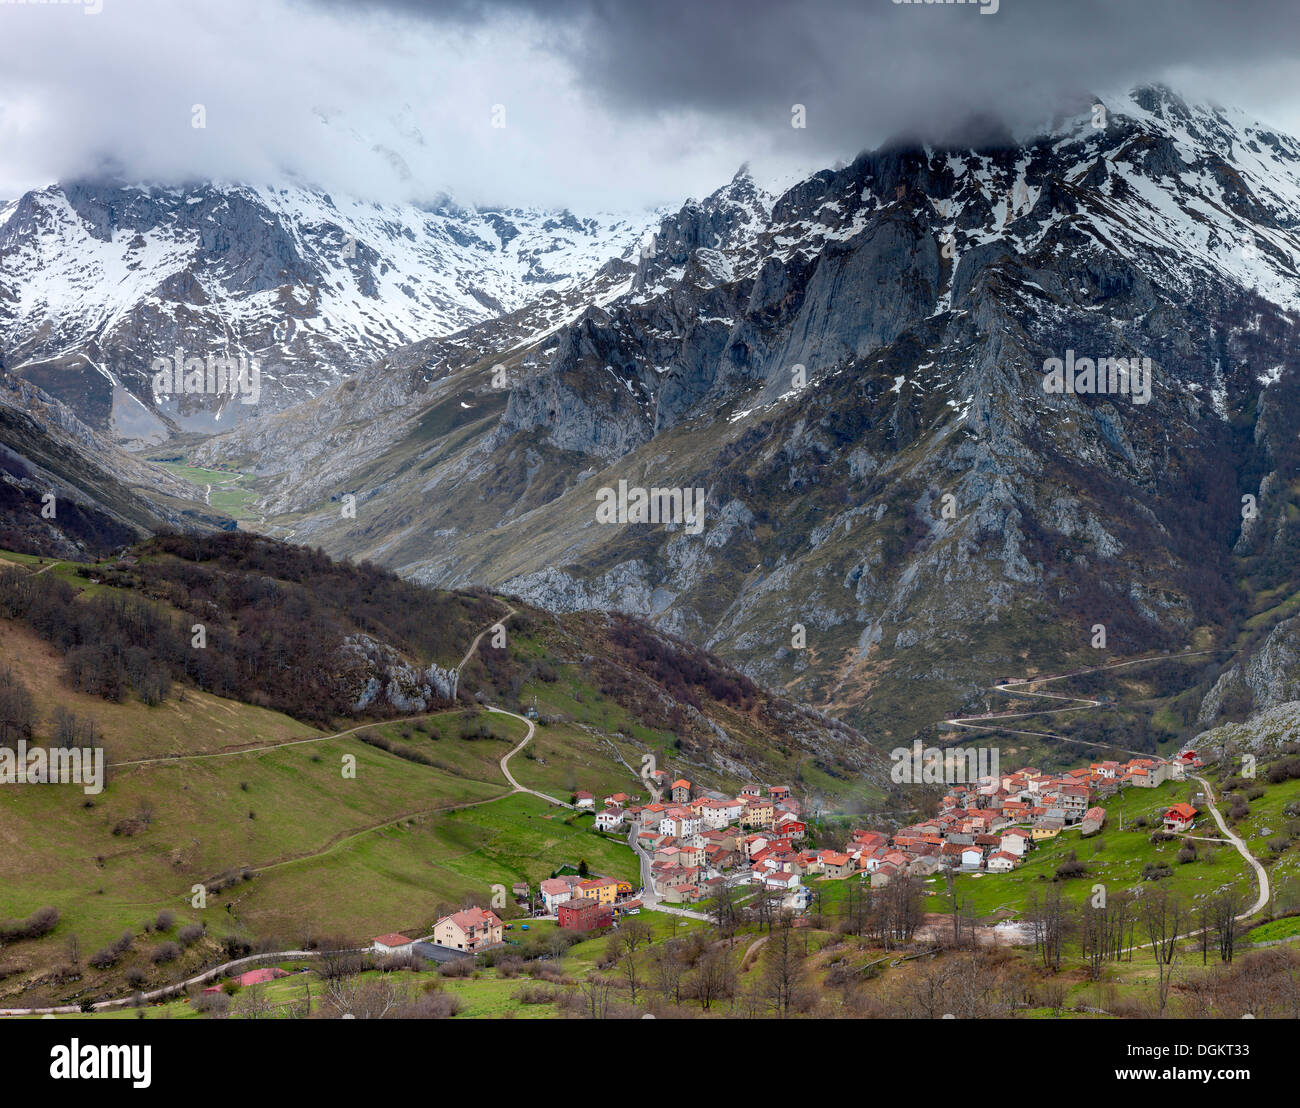 A view towards Sotres from Invernales de La Caballa in the Picos de Europa National Park. Stock Photo